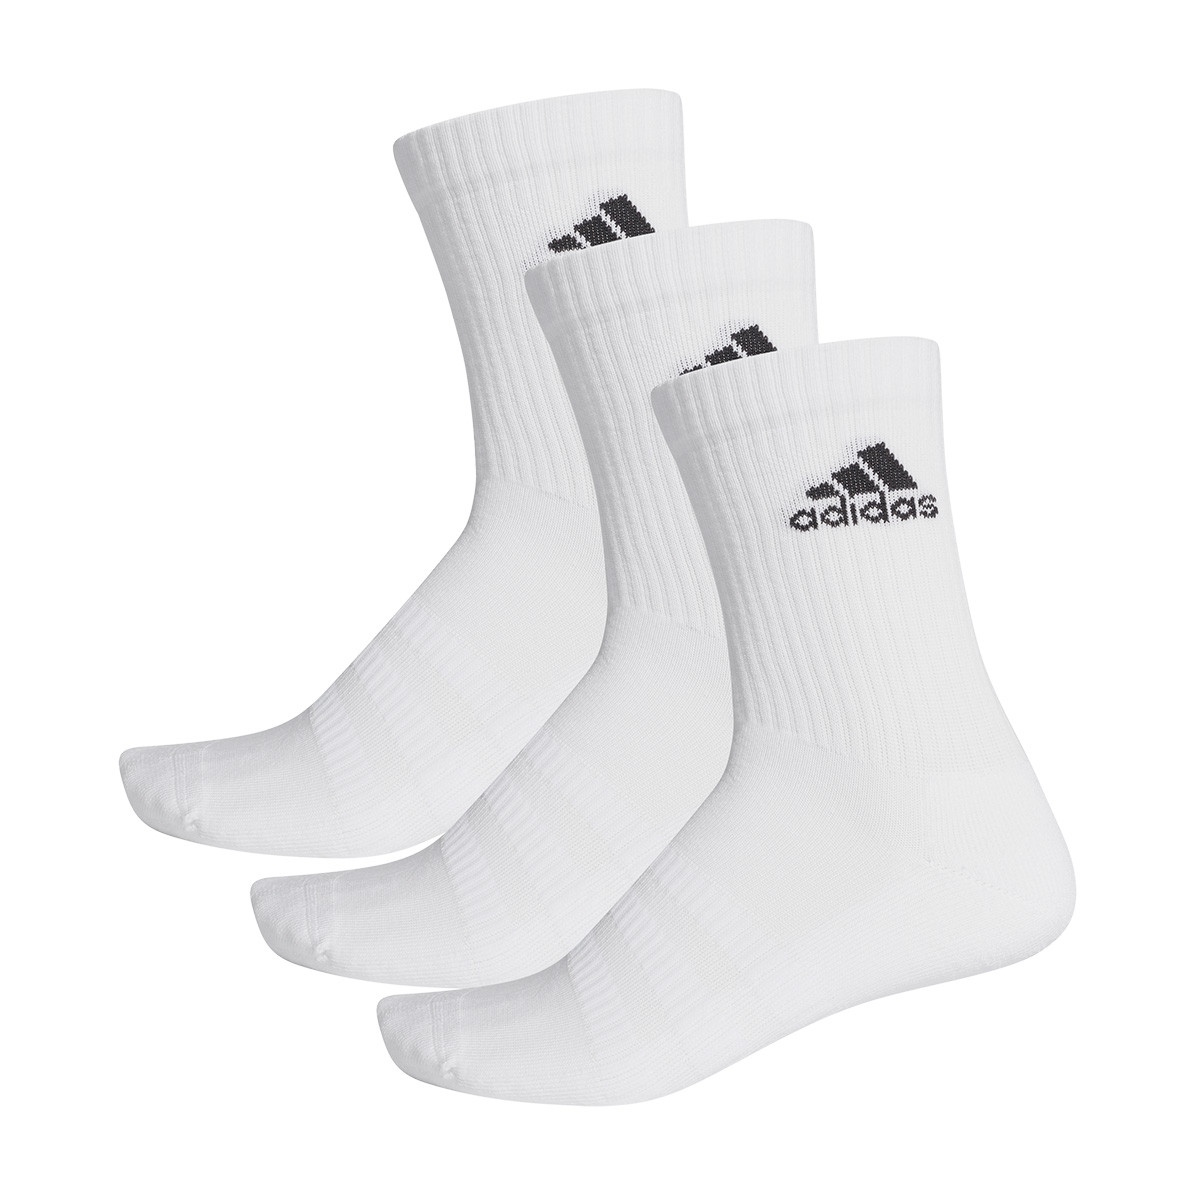 adidas soccer training socks